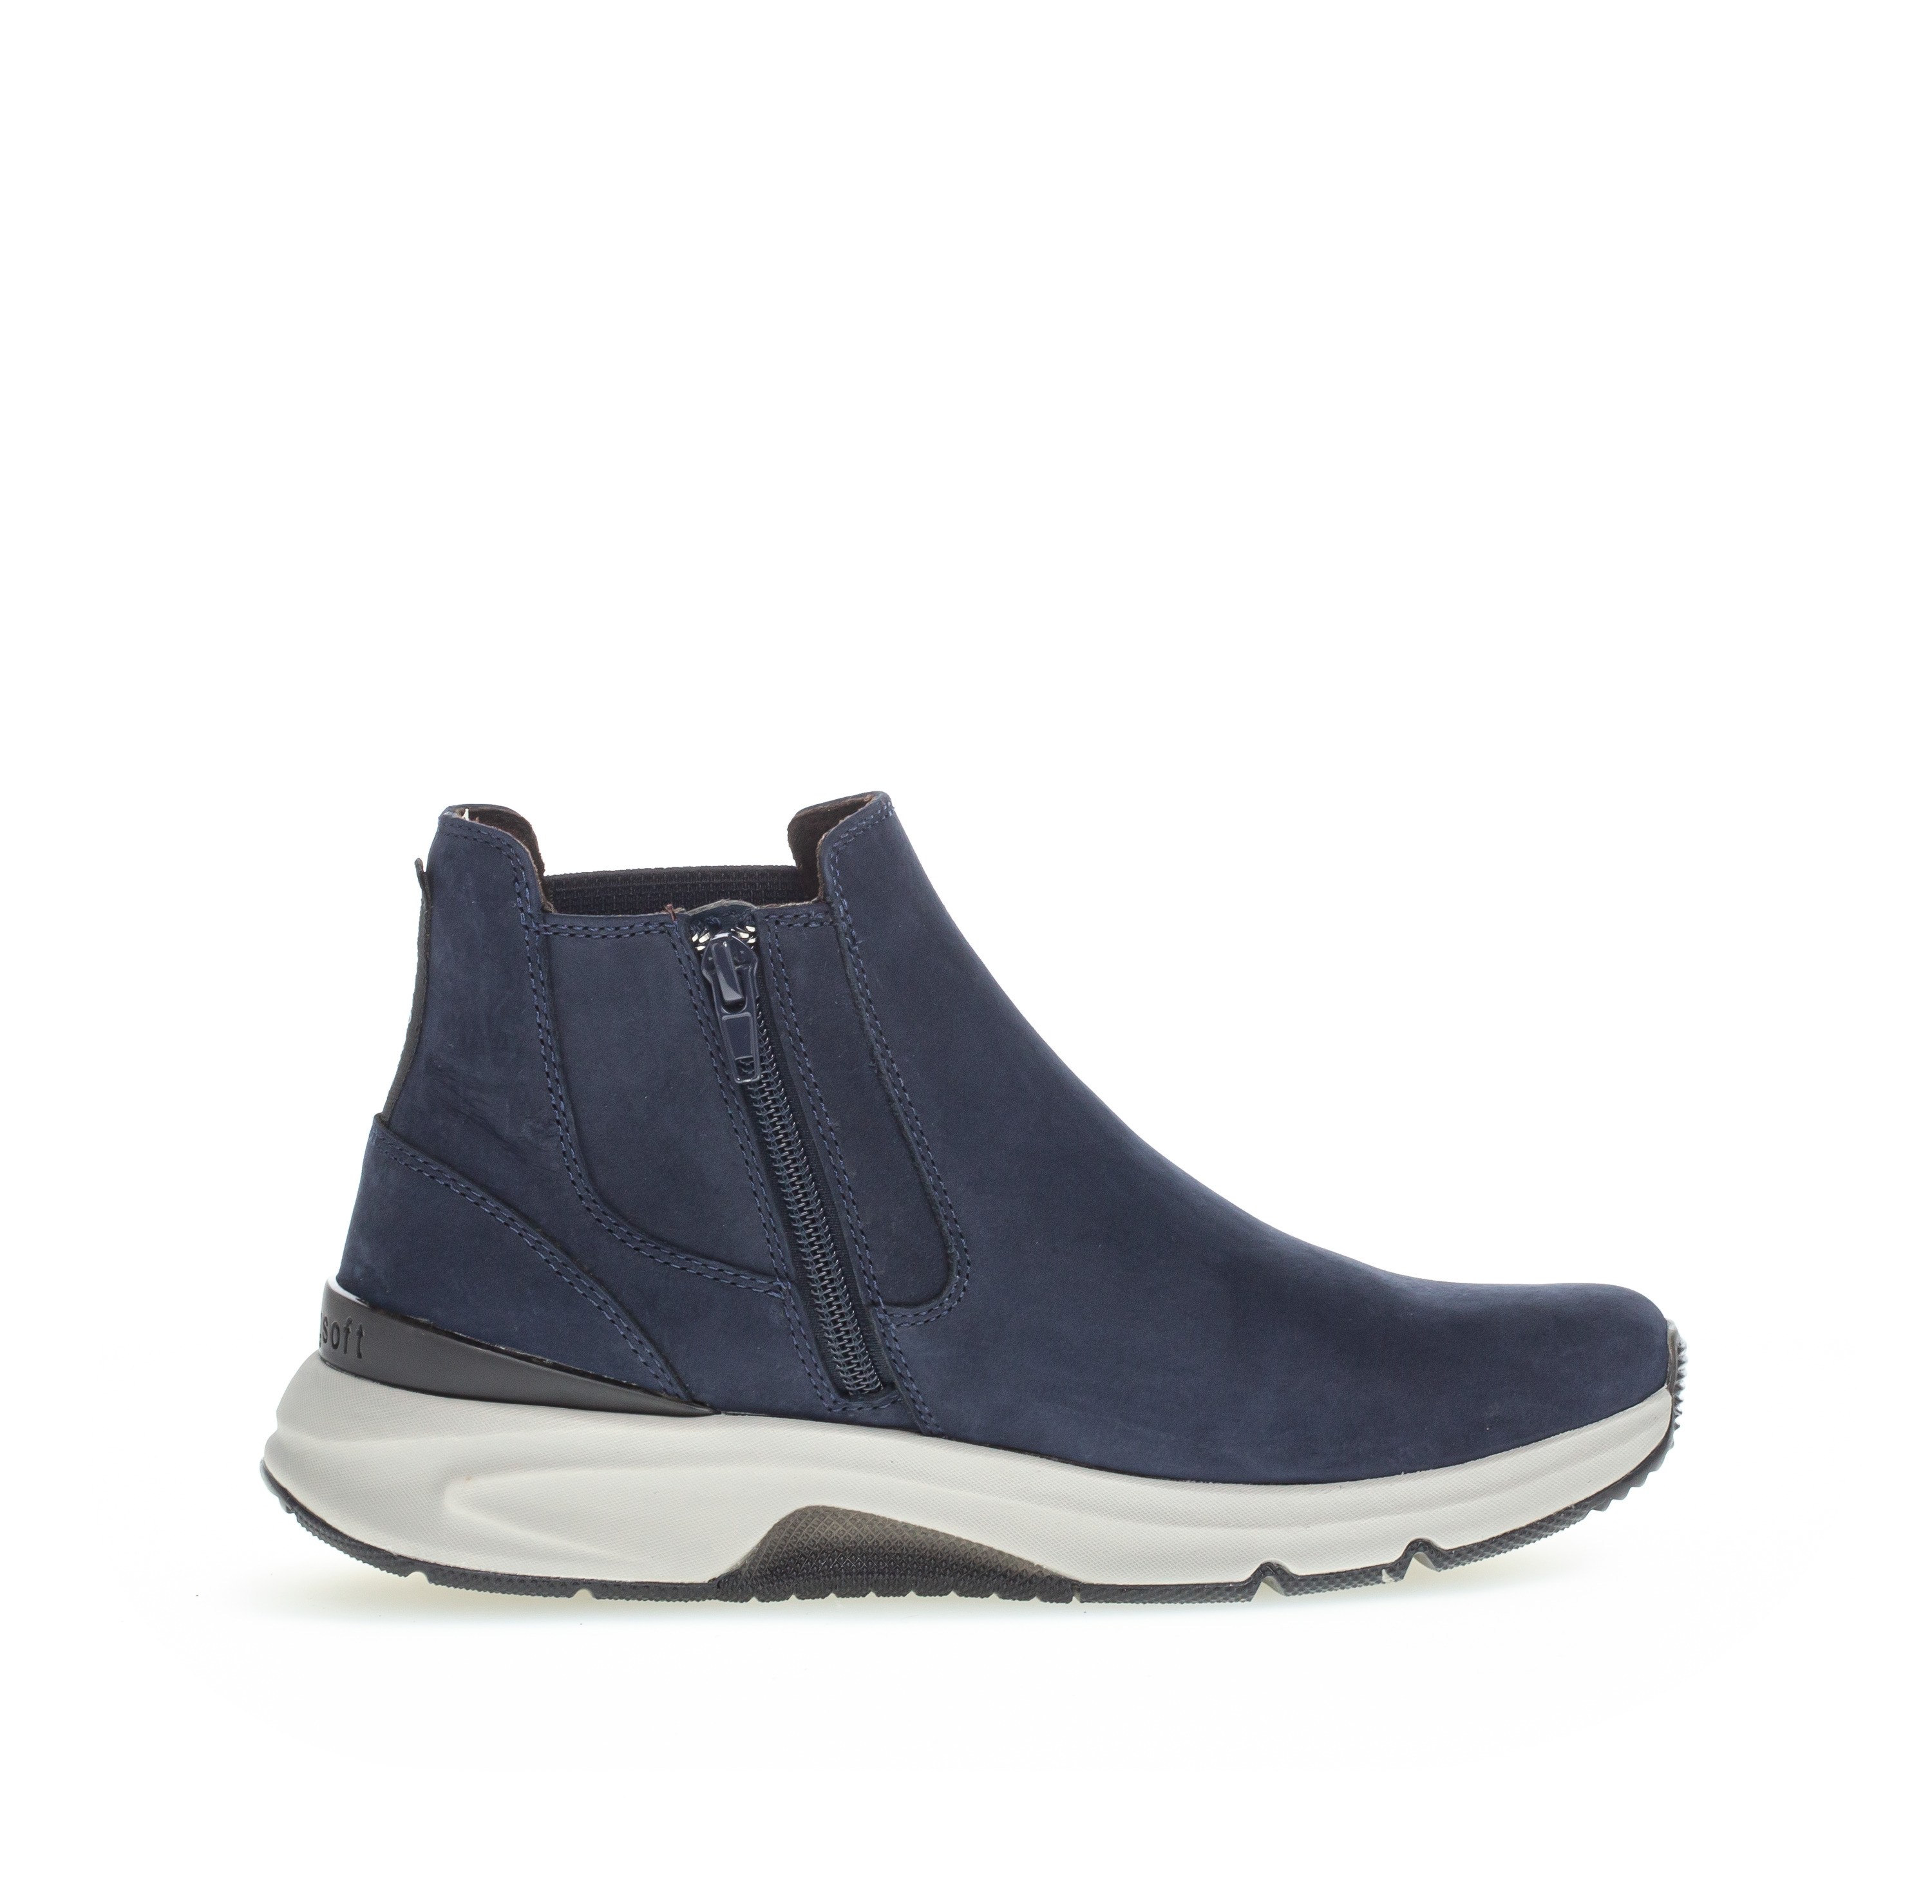 Gabor Shoes Chelsea Boot - Blau Leder